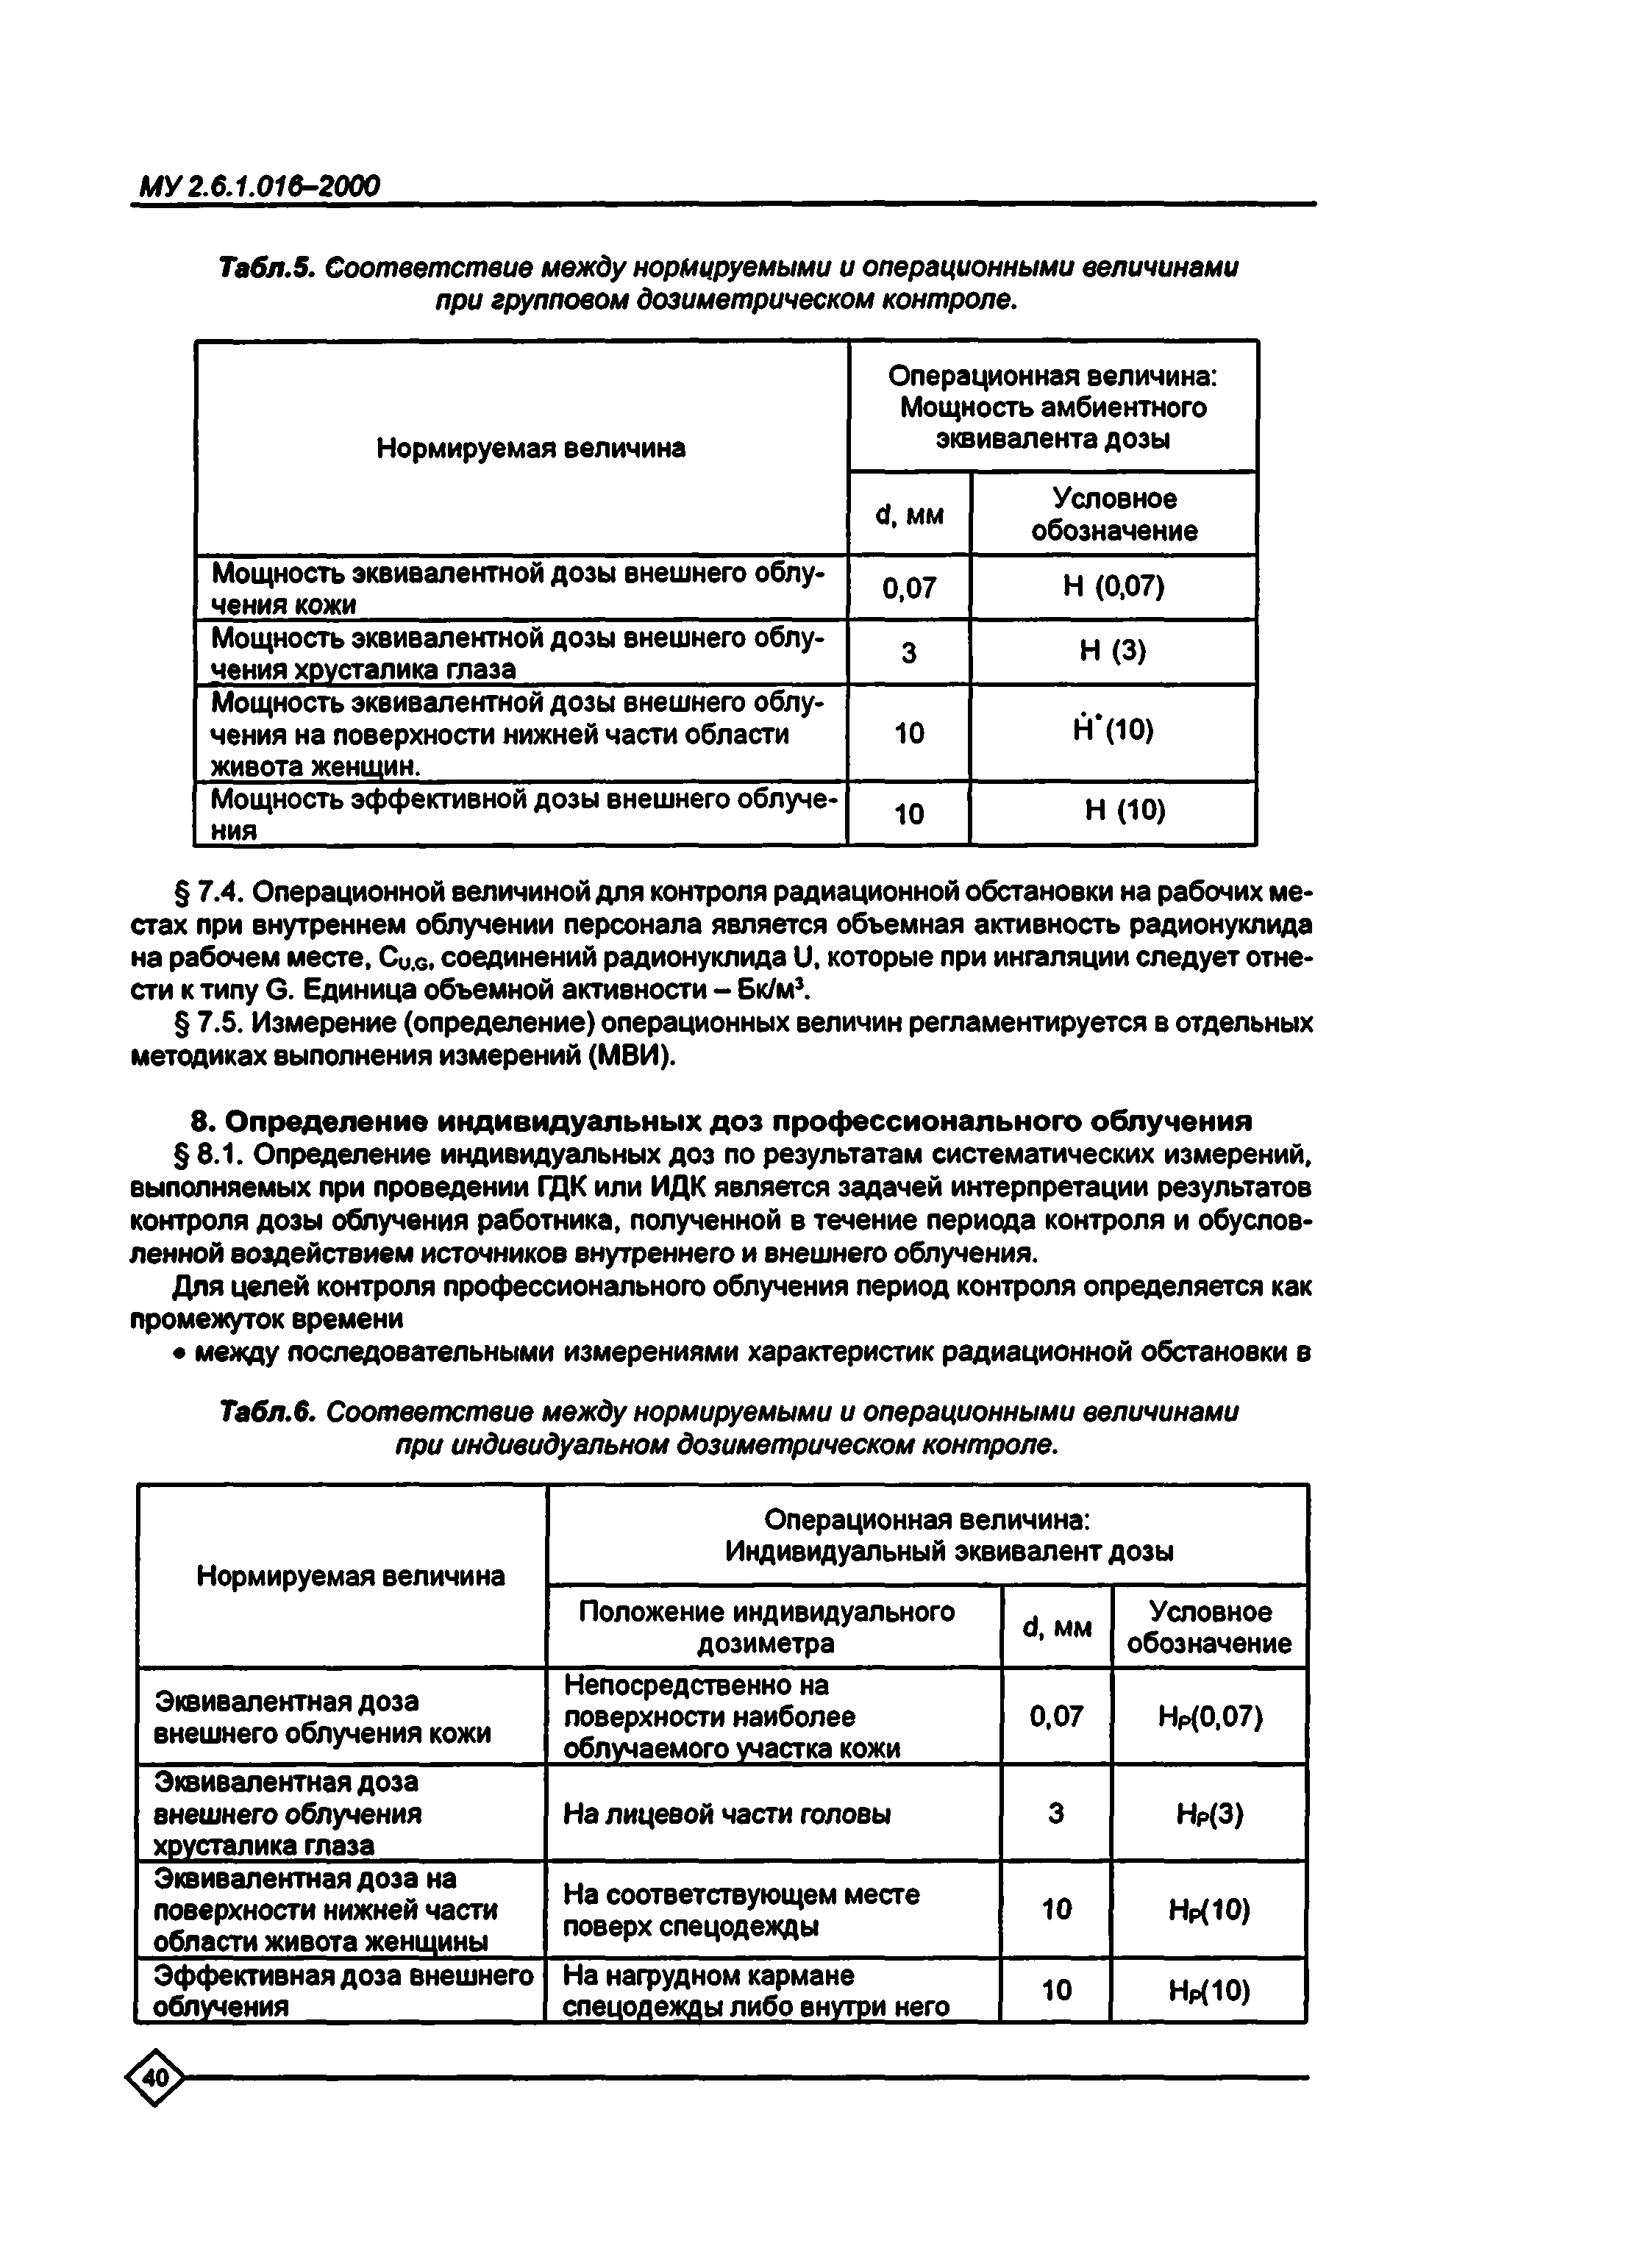 МУ 2.6.1.016-2000